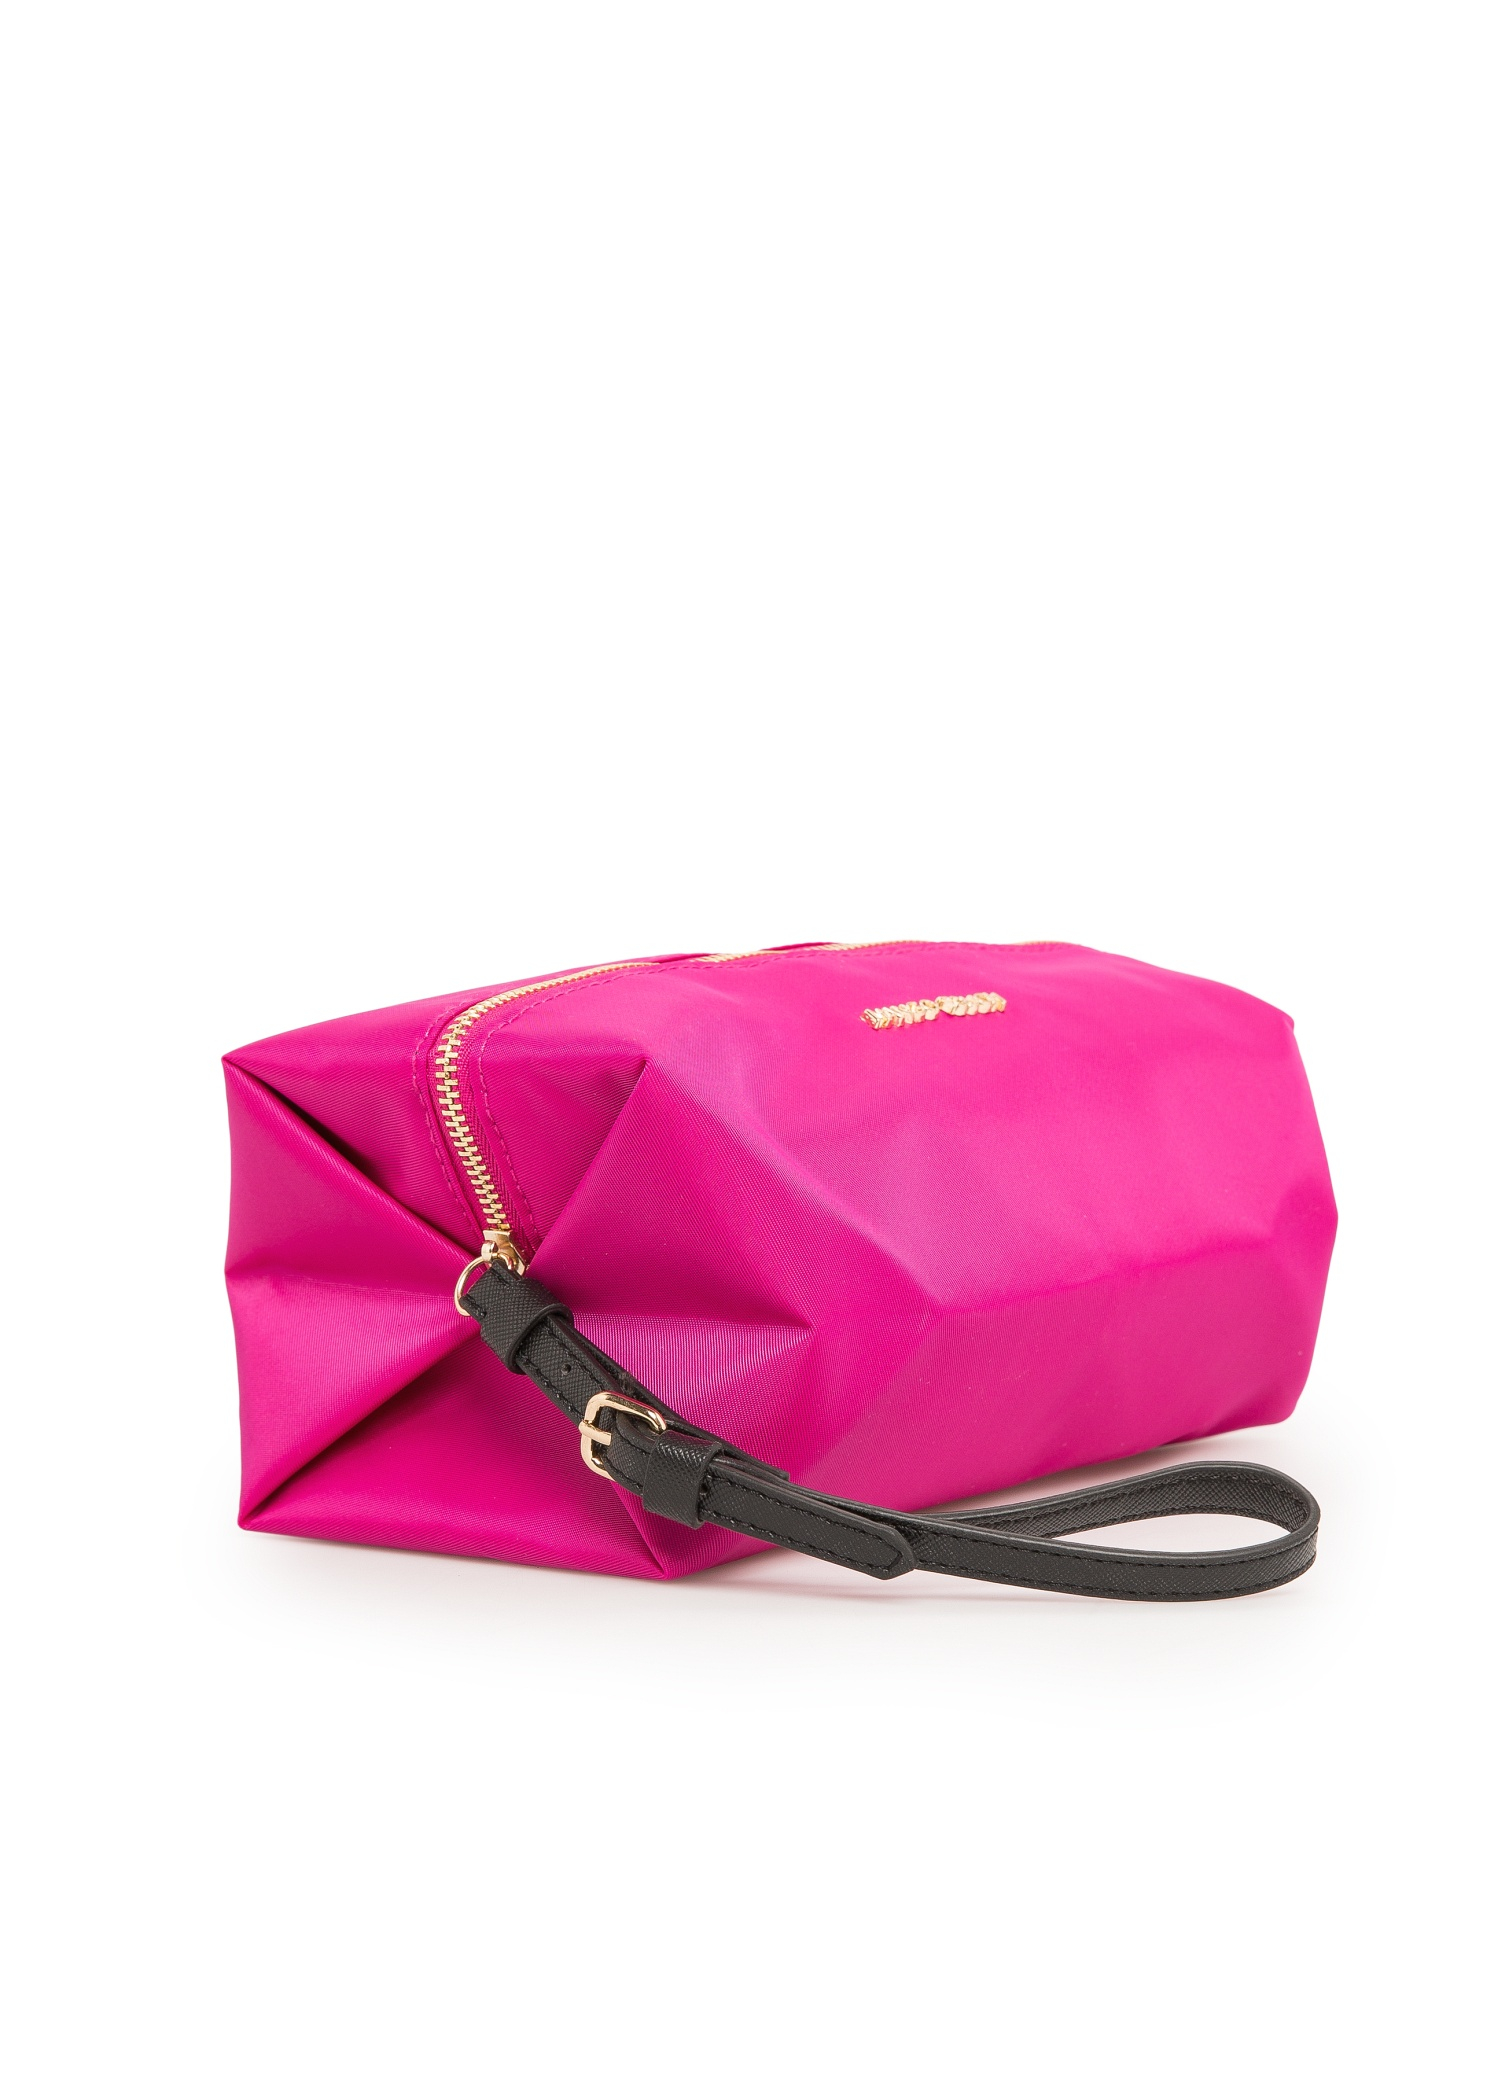 Lyst - Mango Nylon Cosmetic Bag in Pink